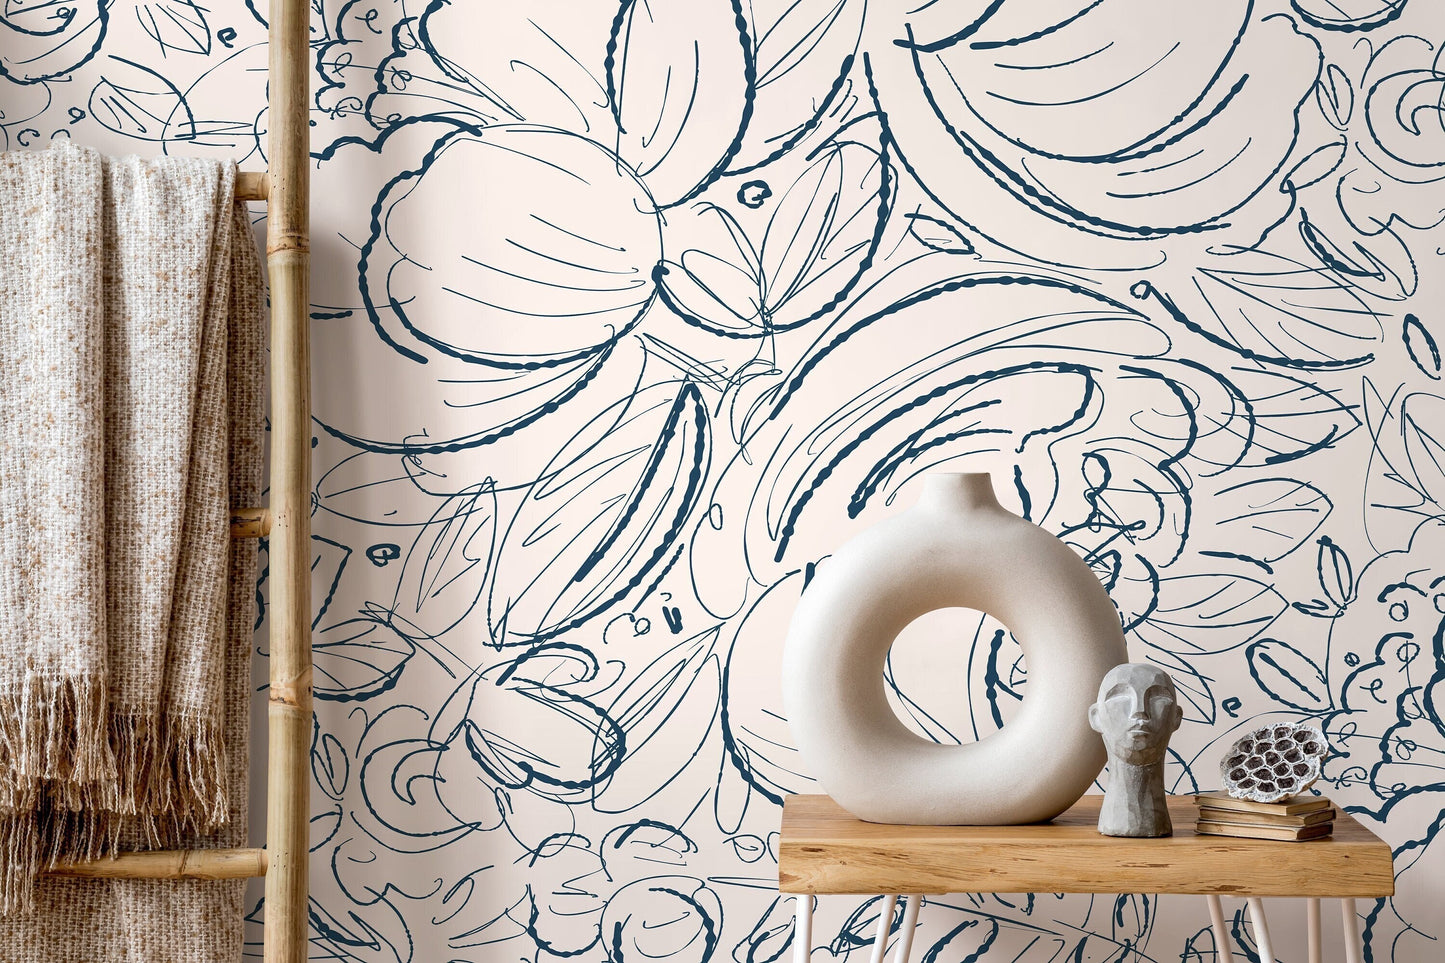 Boho Floral Hand Drawing Wallpaper / Peel and Stick Wallpaper Removable Wallpaper Home Decor Wall Art Wall Decor Room Decor - D054